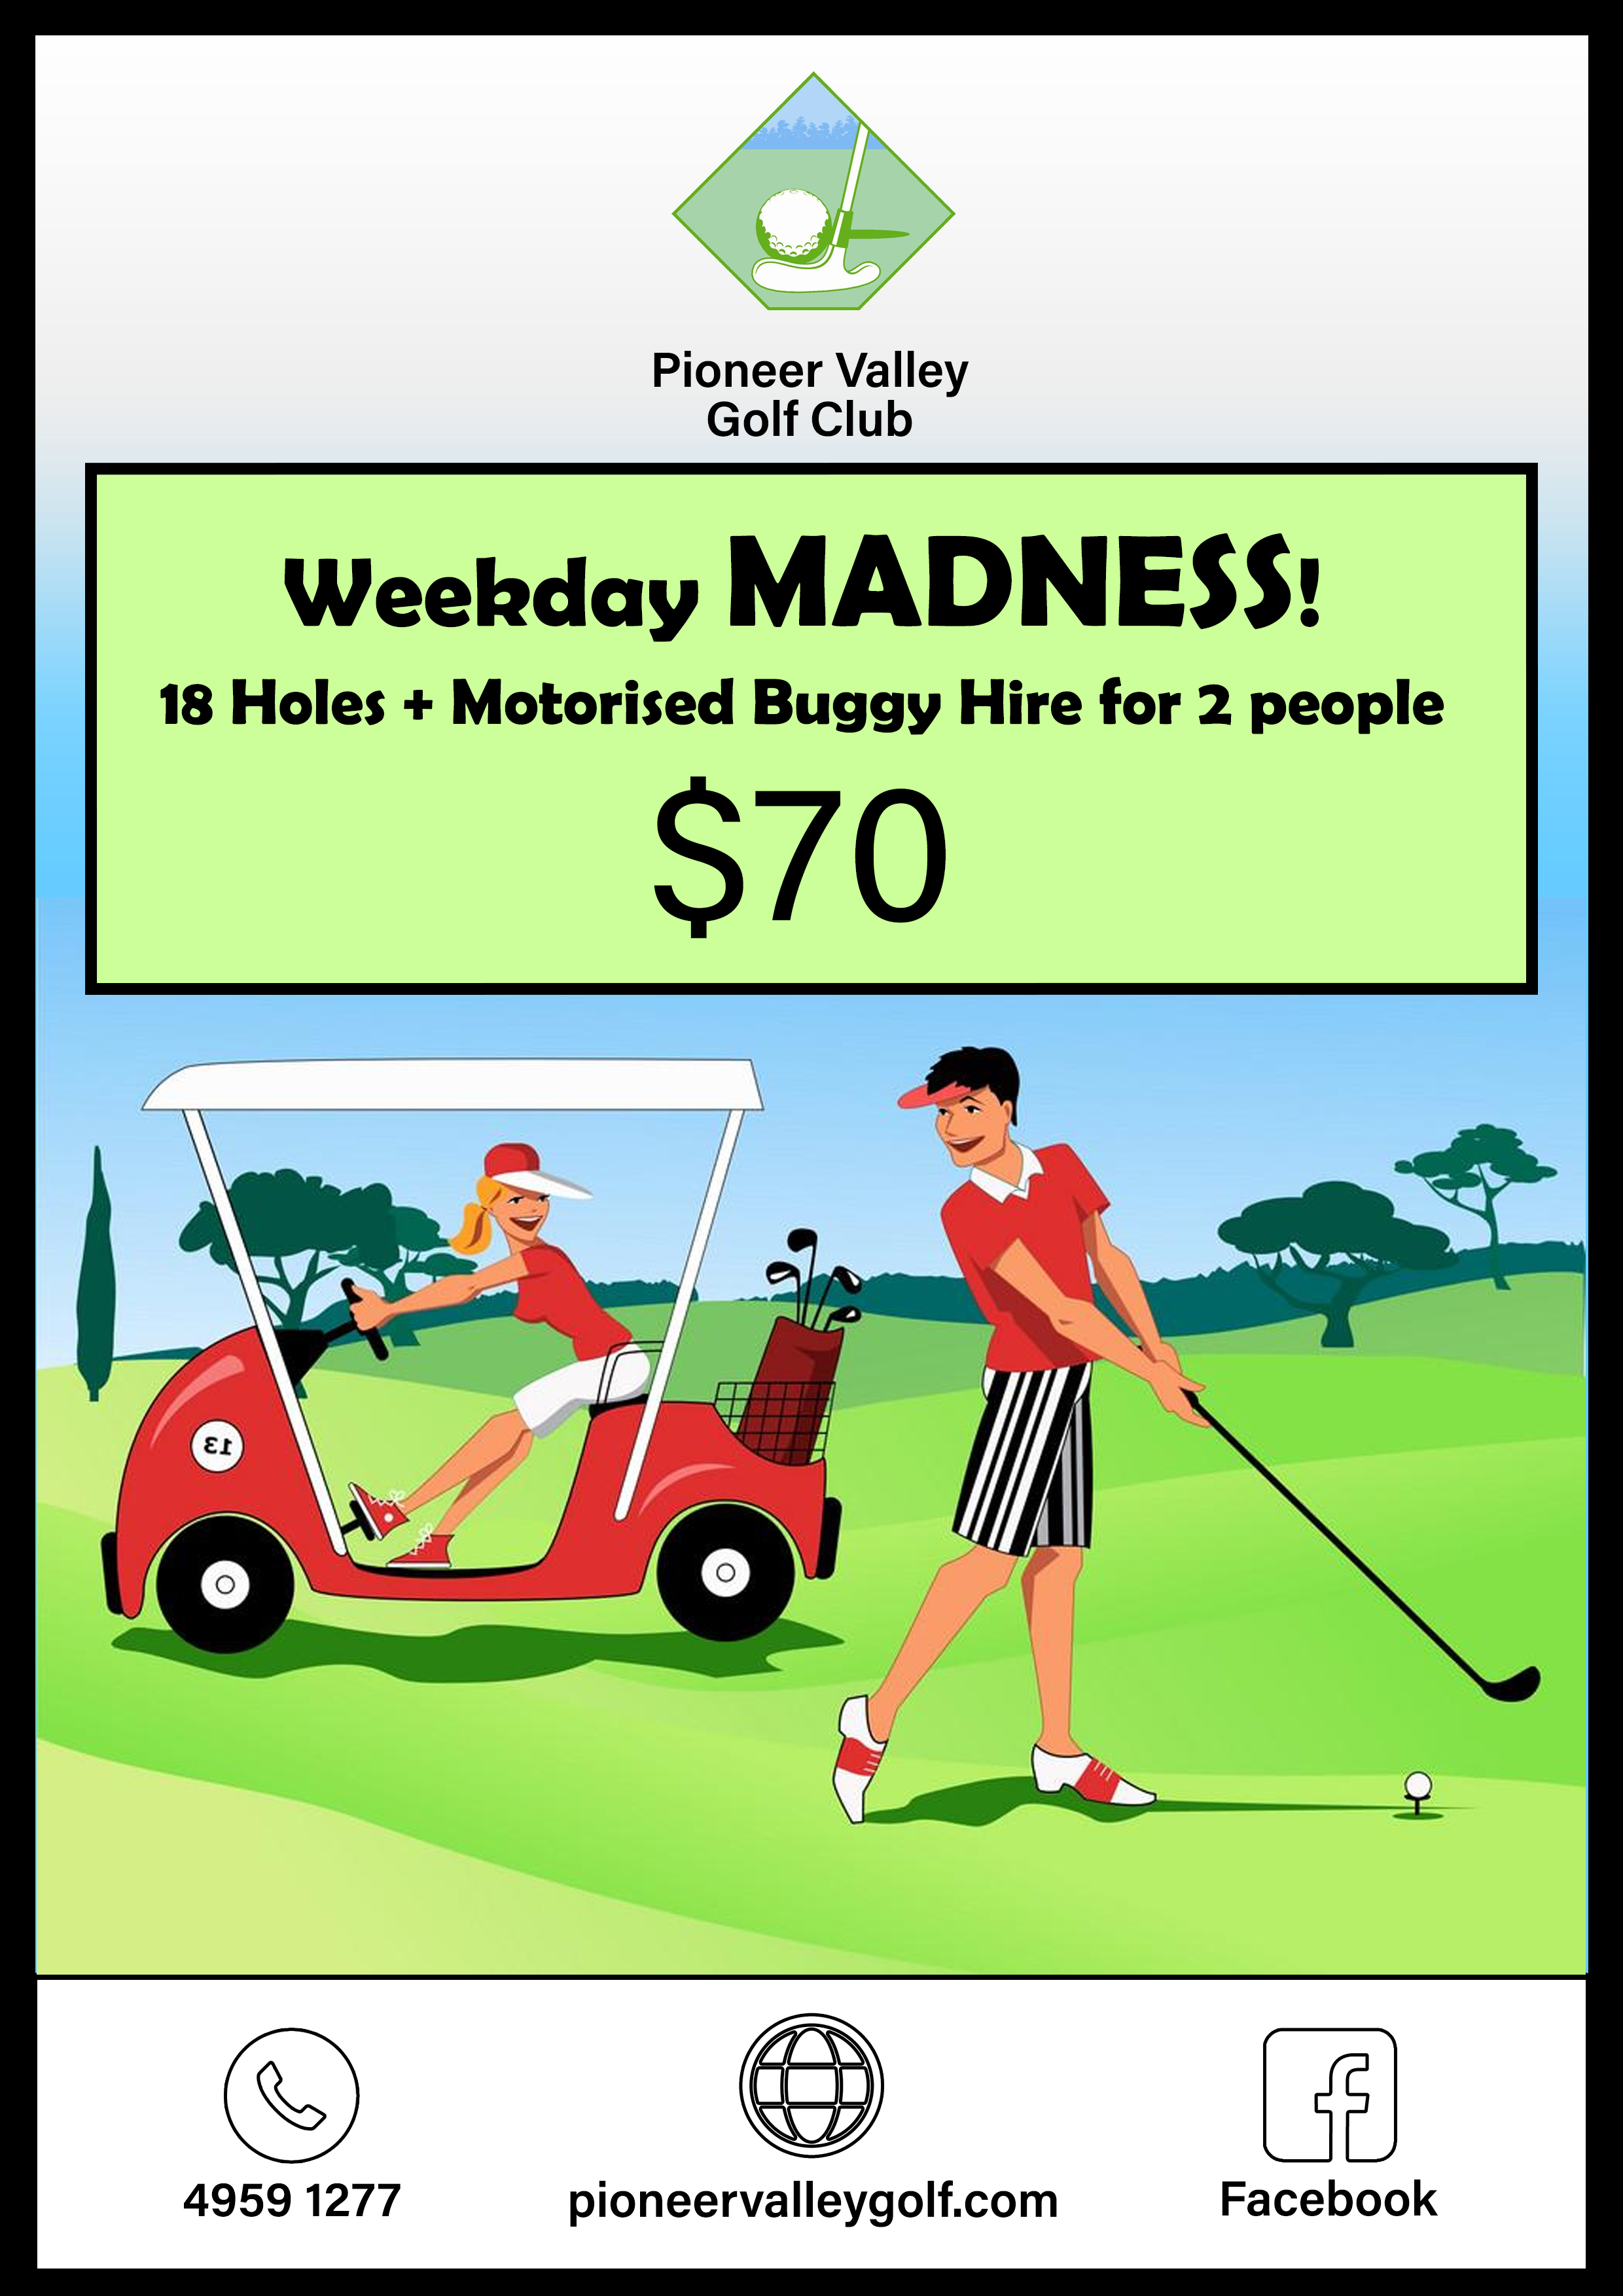 Pioneer Valley Golf Club - Great Value Deals